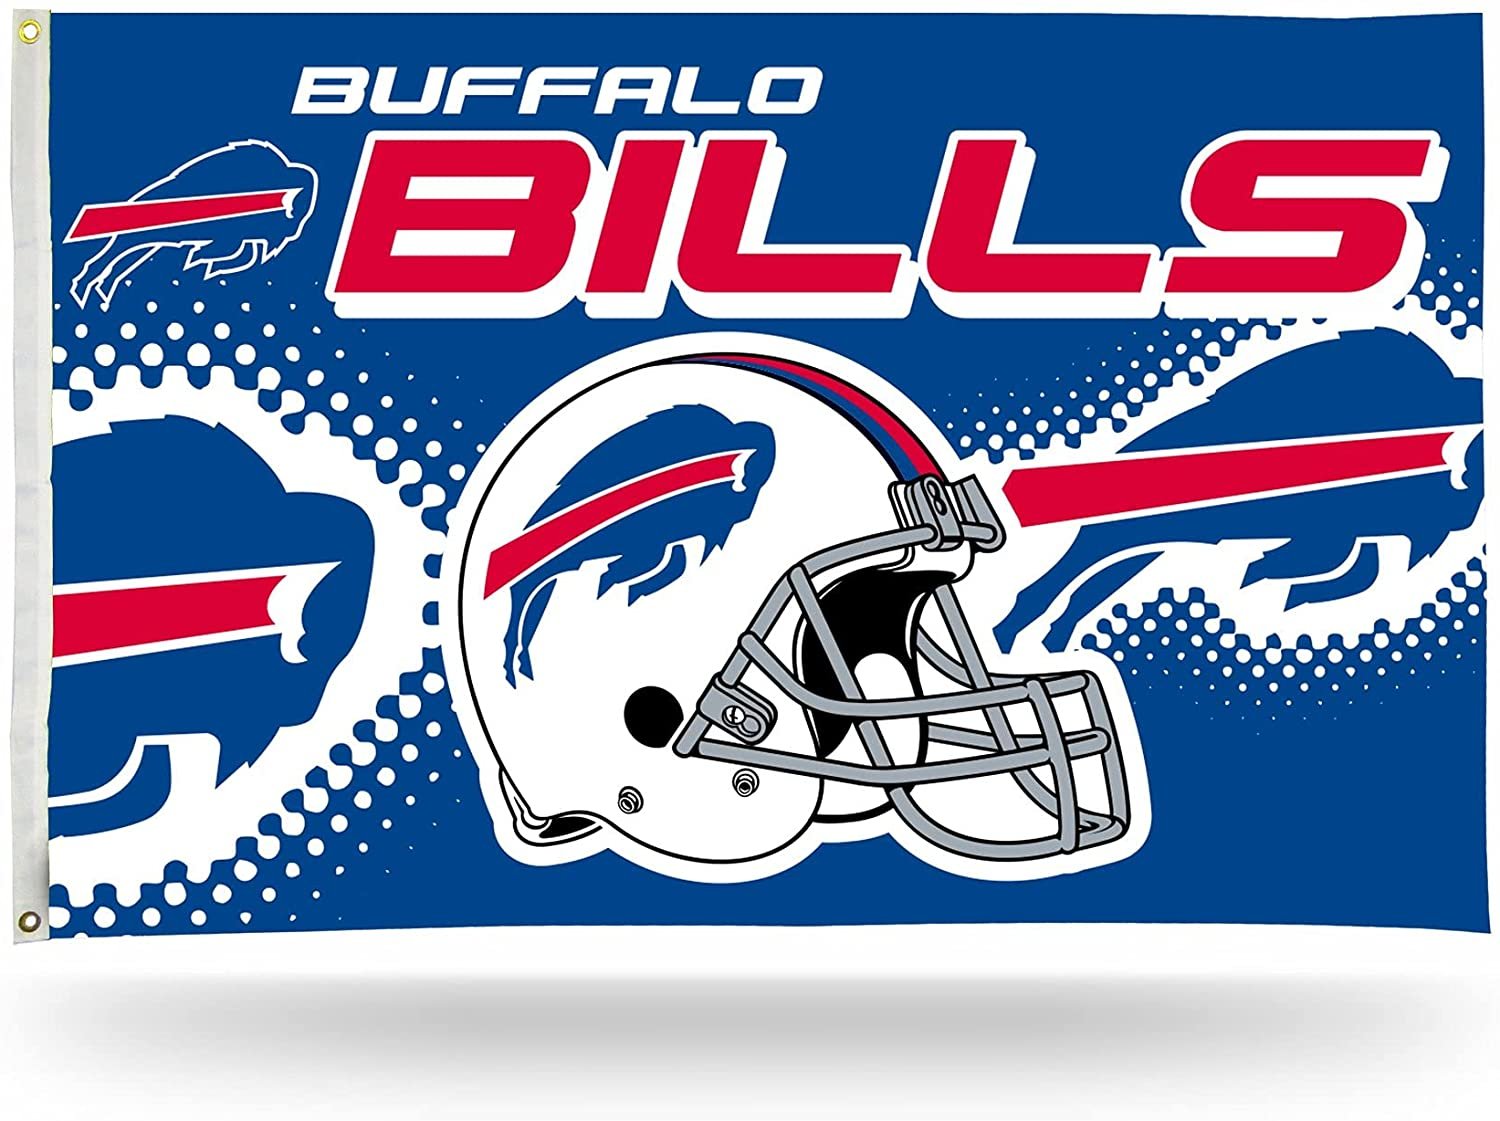 Buffalo Bills Premium 3x5 Feet Flag Banner, Helmet Design, Metal Grommets, Outdoor Use, Single Sided